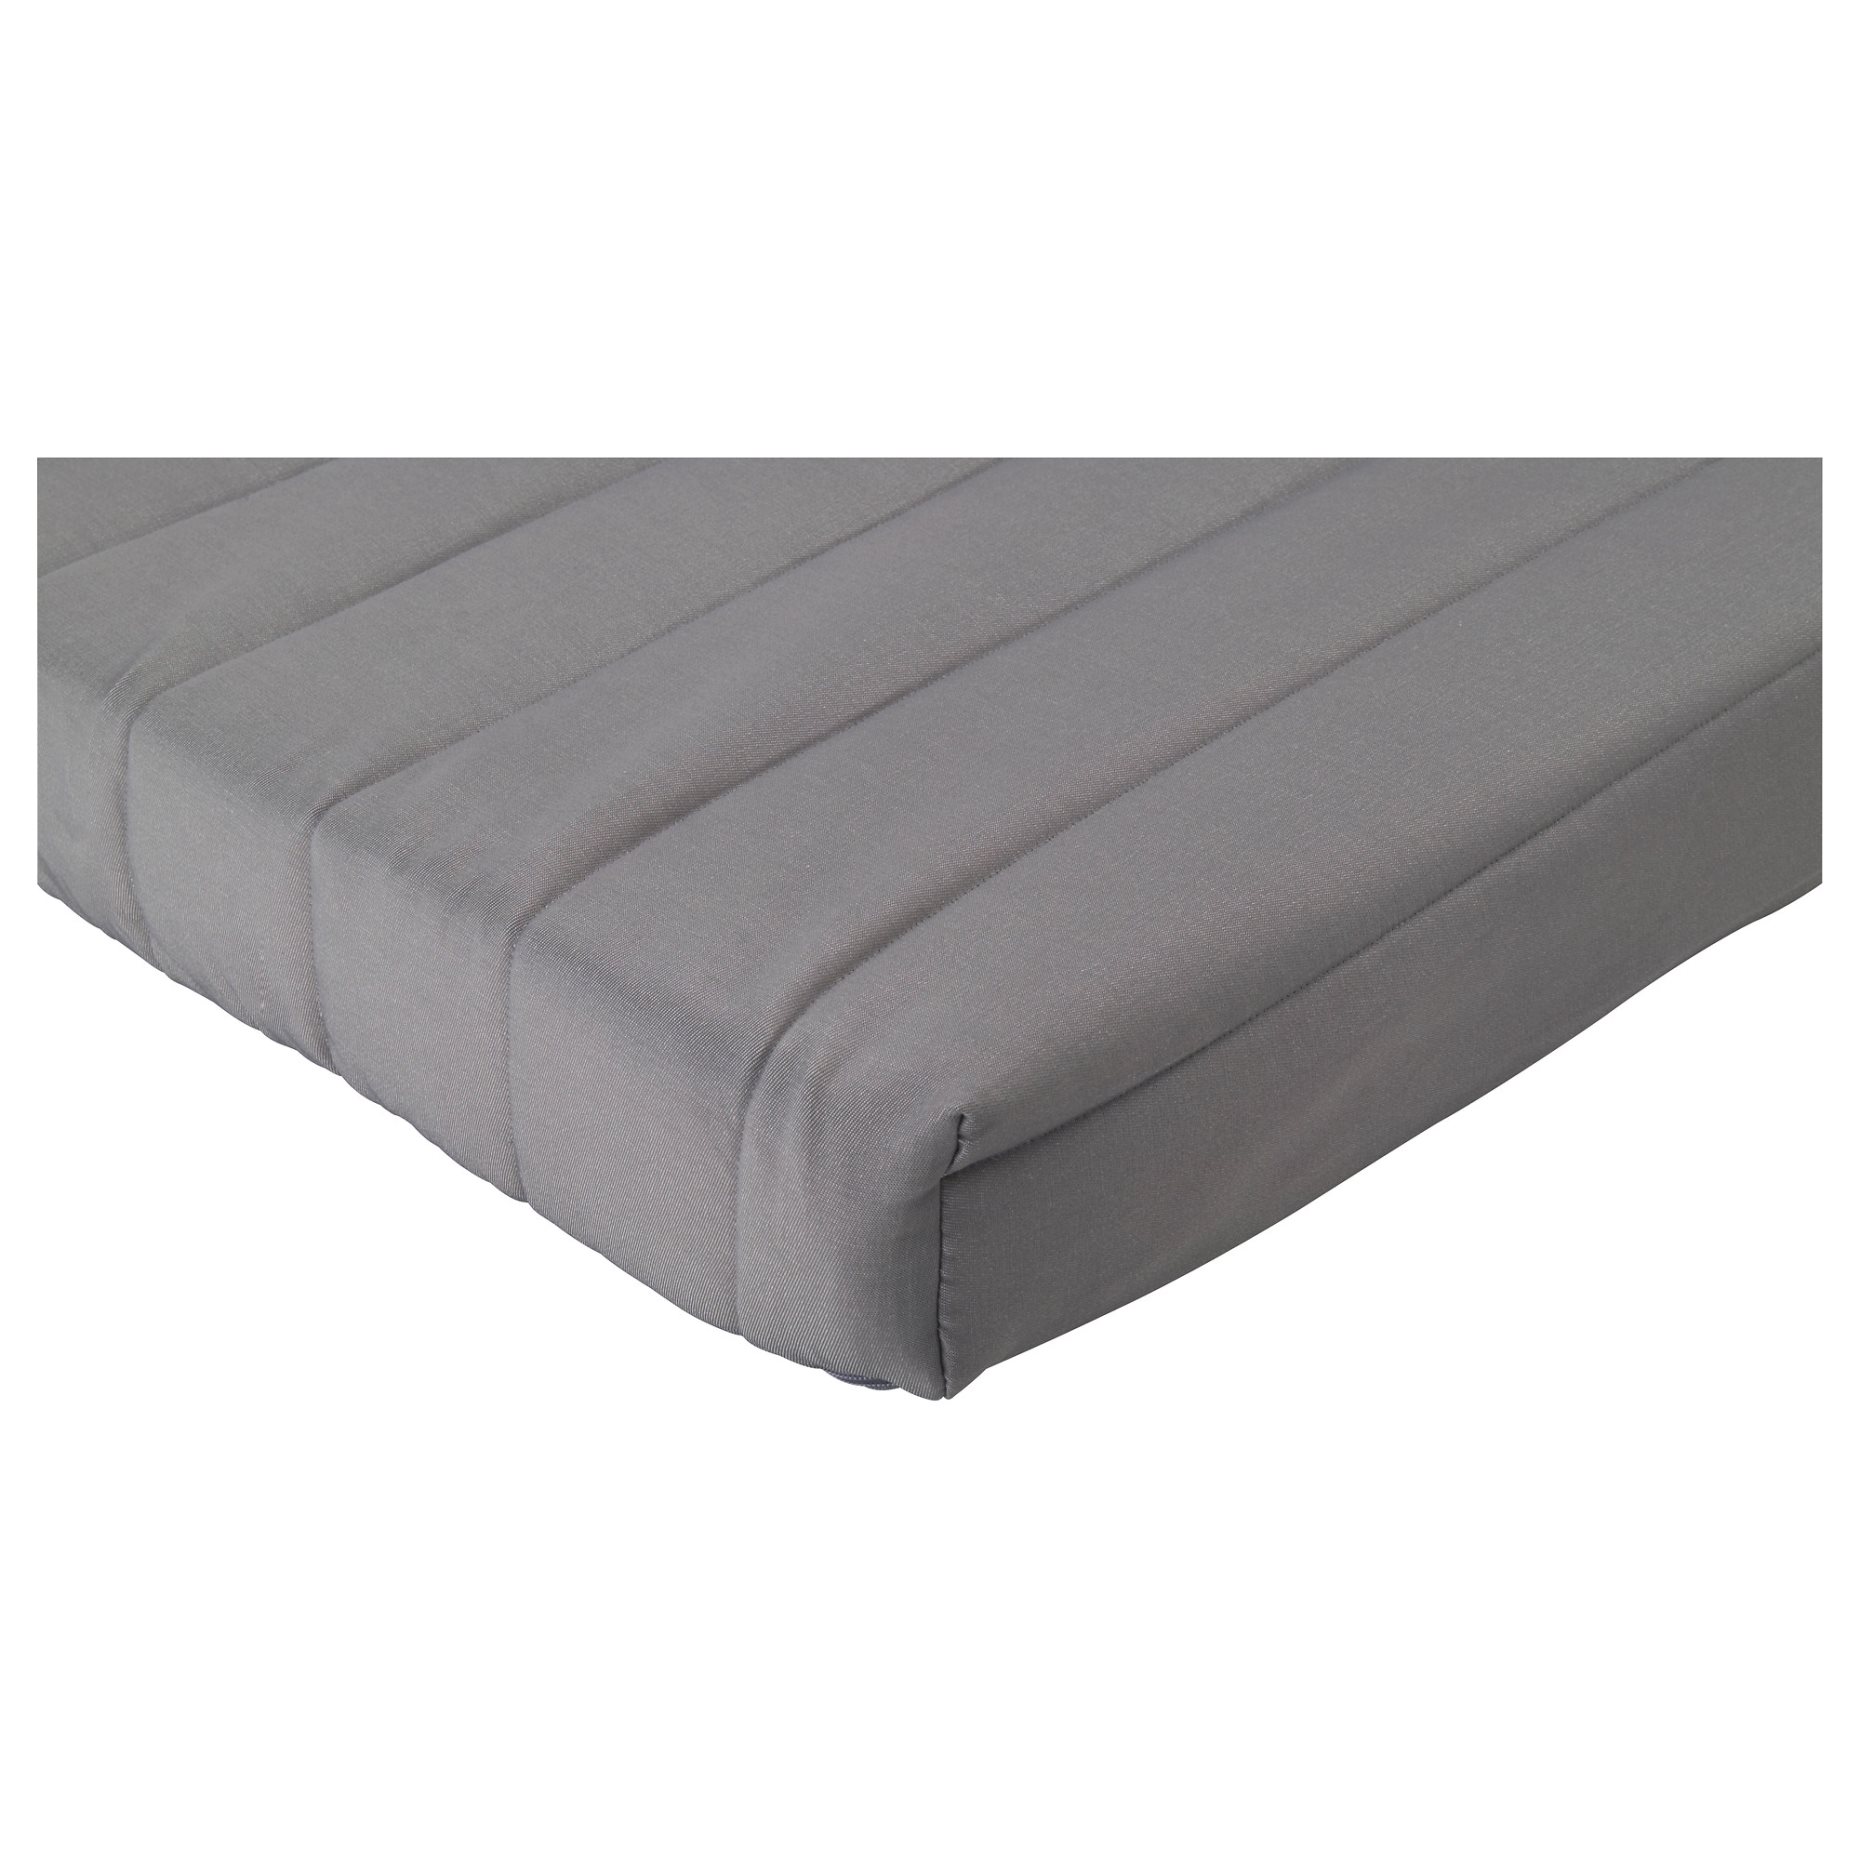 LYCKSELE LOVAS, mattress, 001.020.65